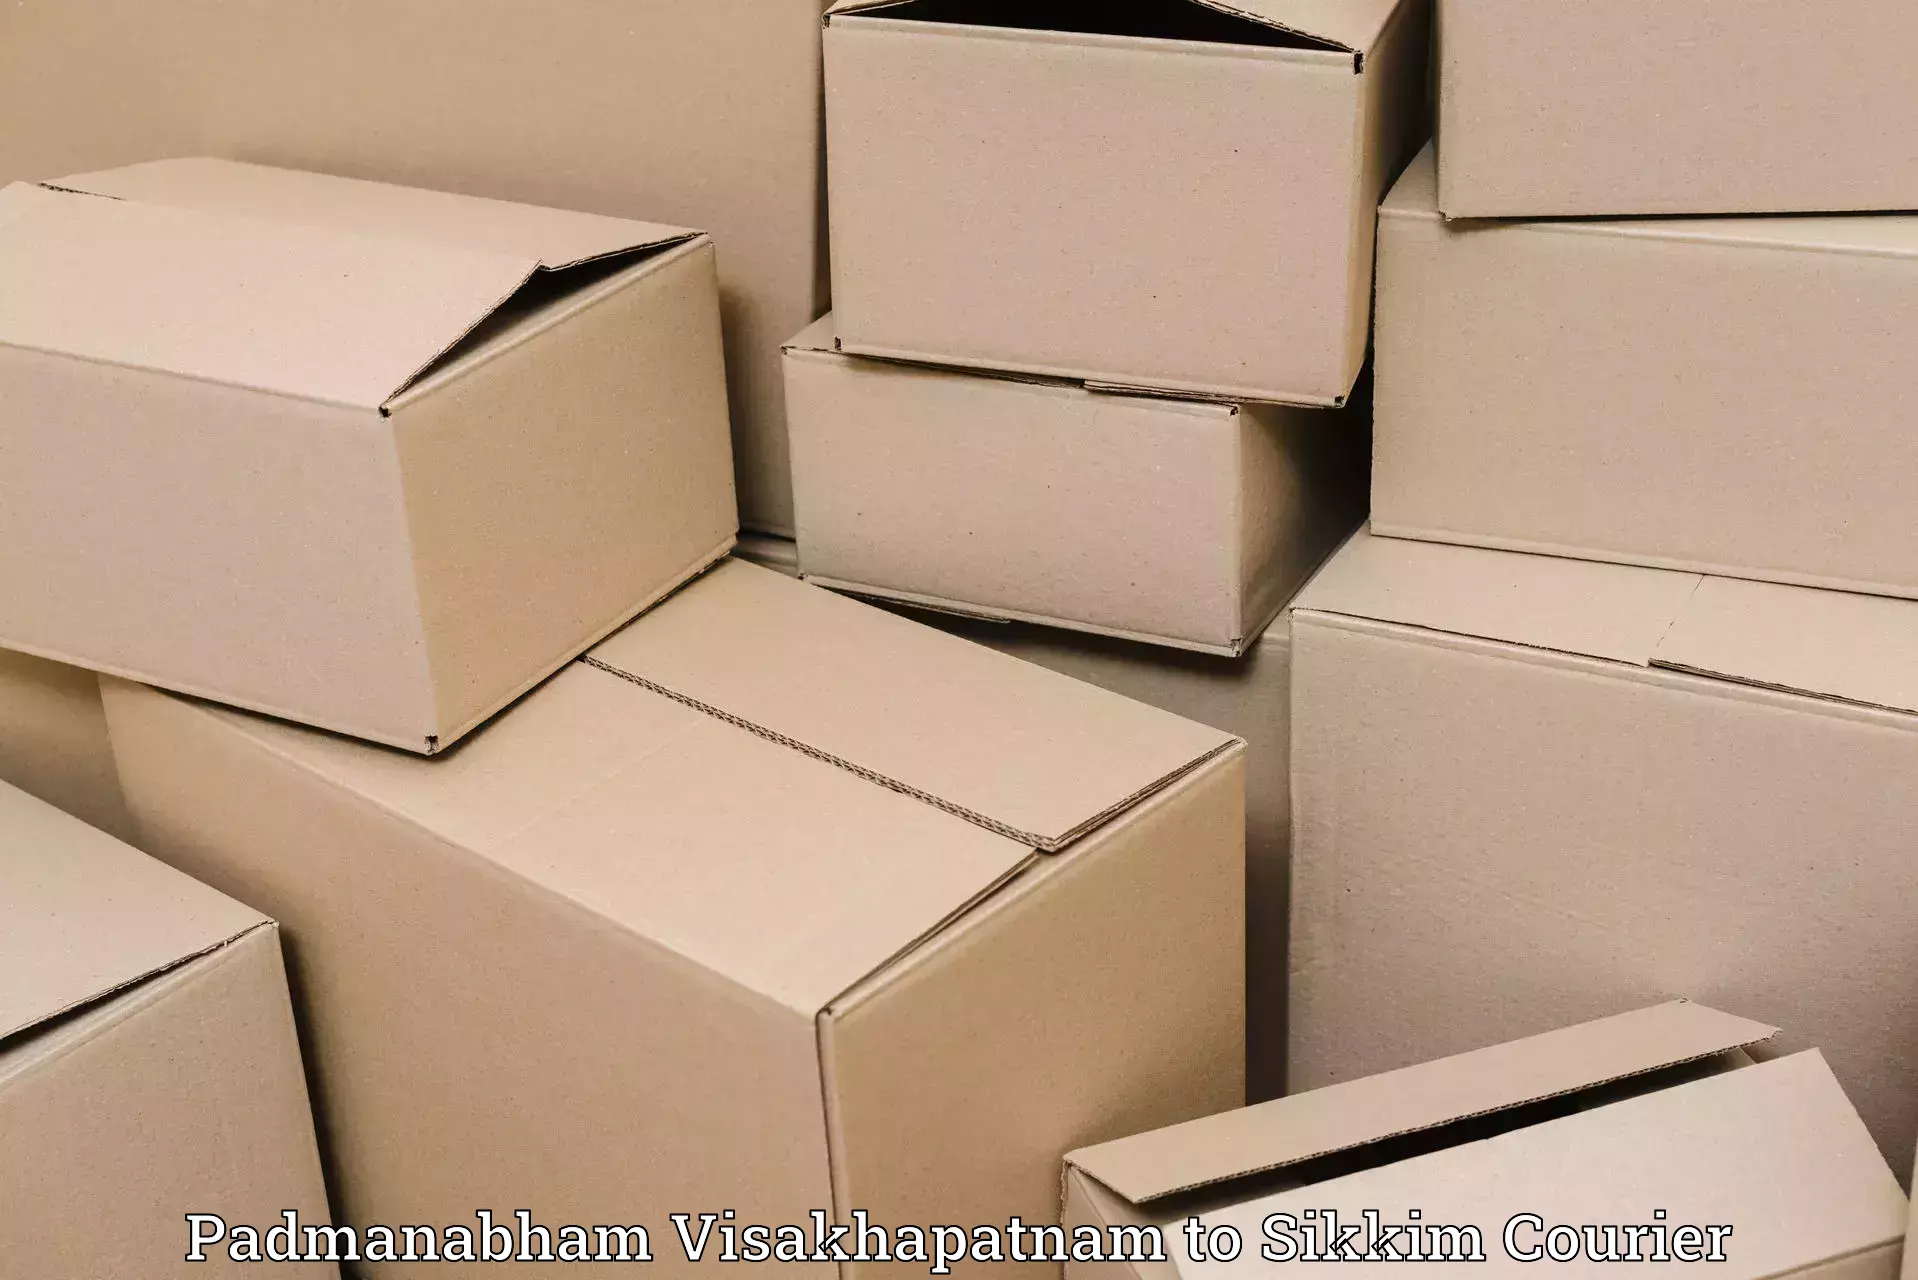 Global shipping networks Padmanabham Visakhapatnam to Rangpo